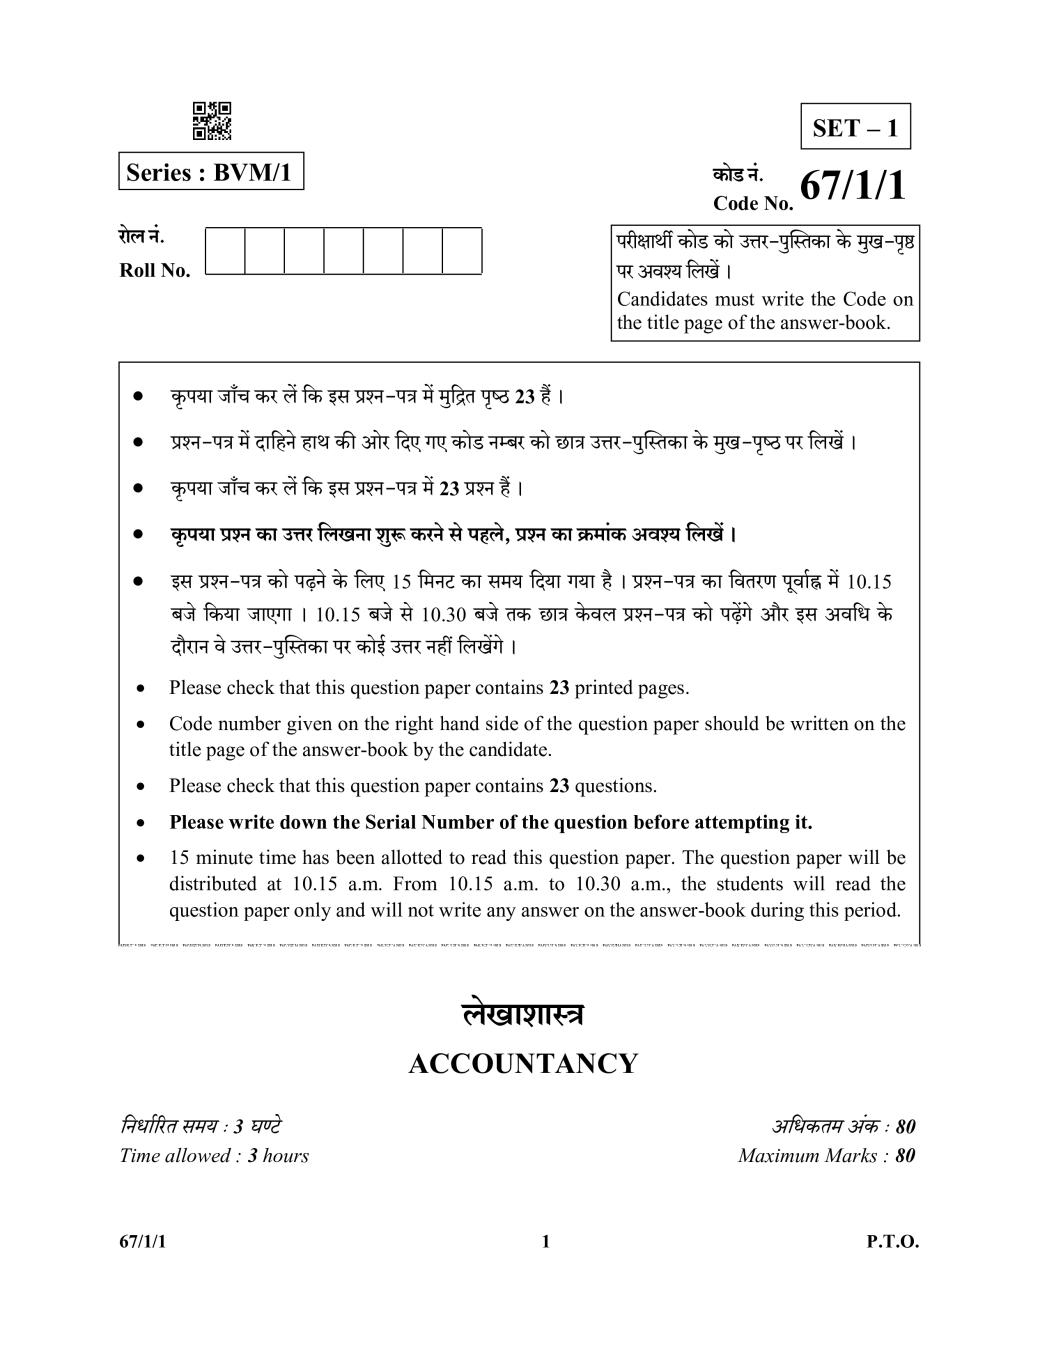 CBSE Class 12 Accountancy Question Paper 2019 Set 1 - Page 1